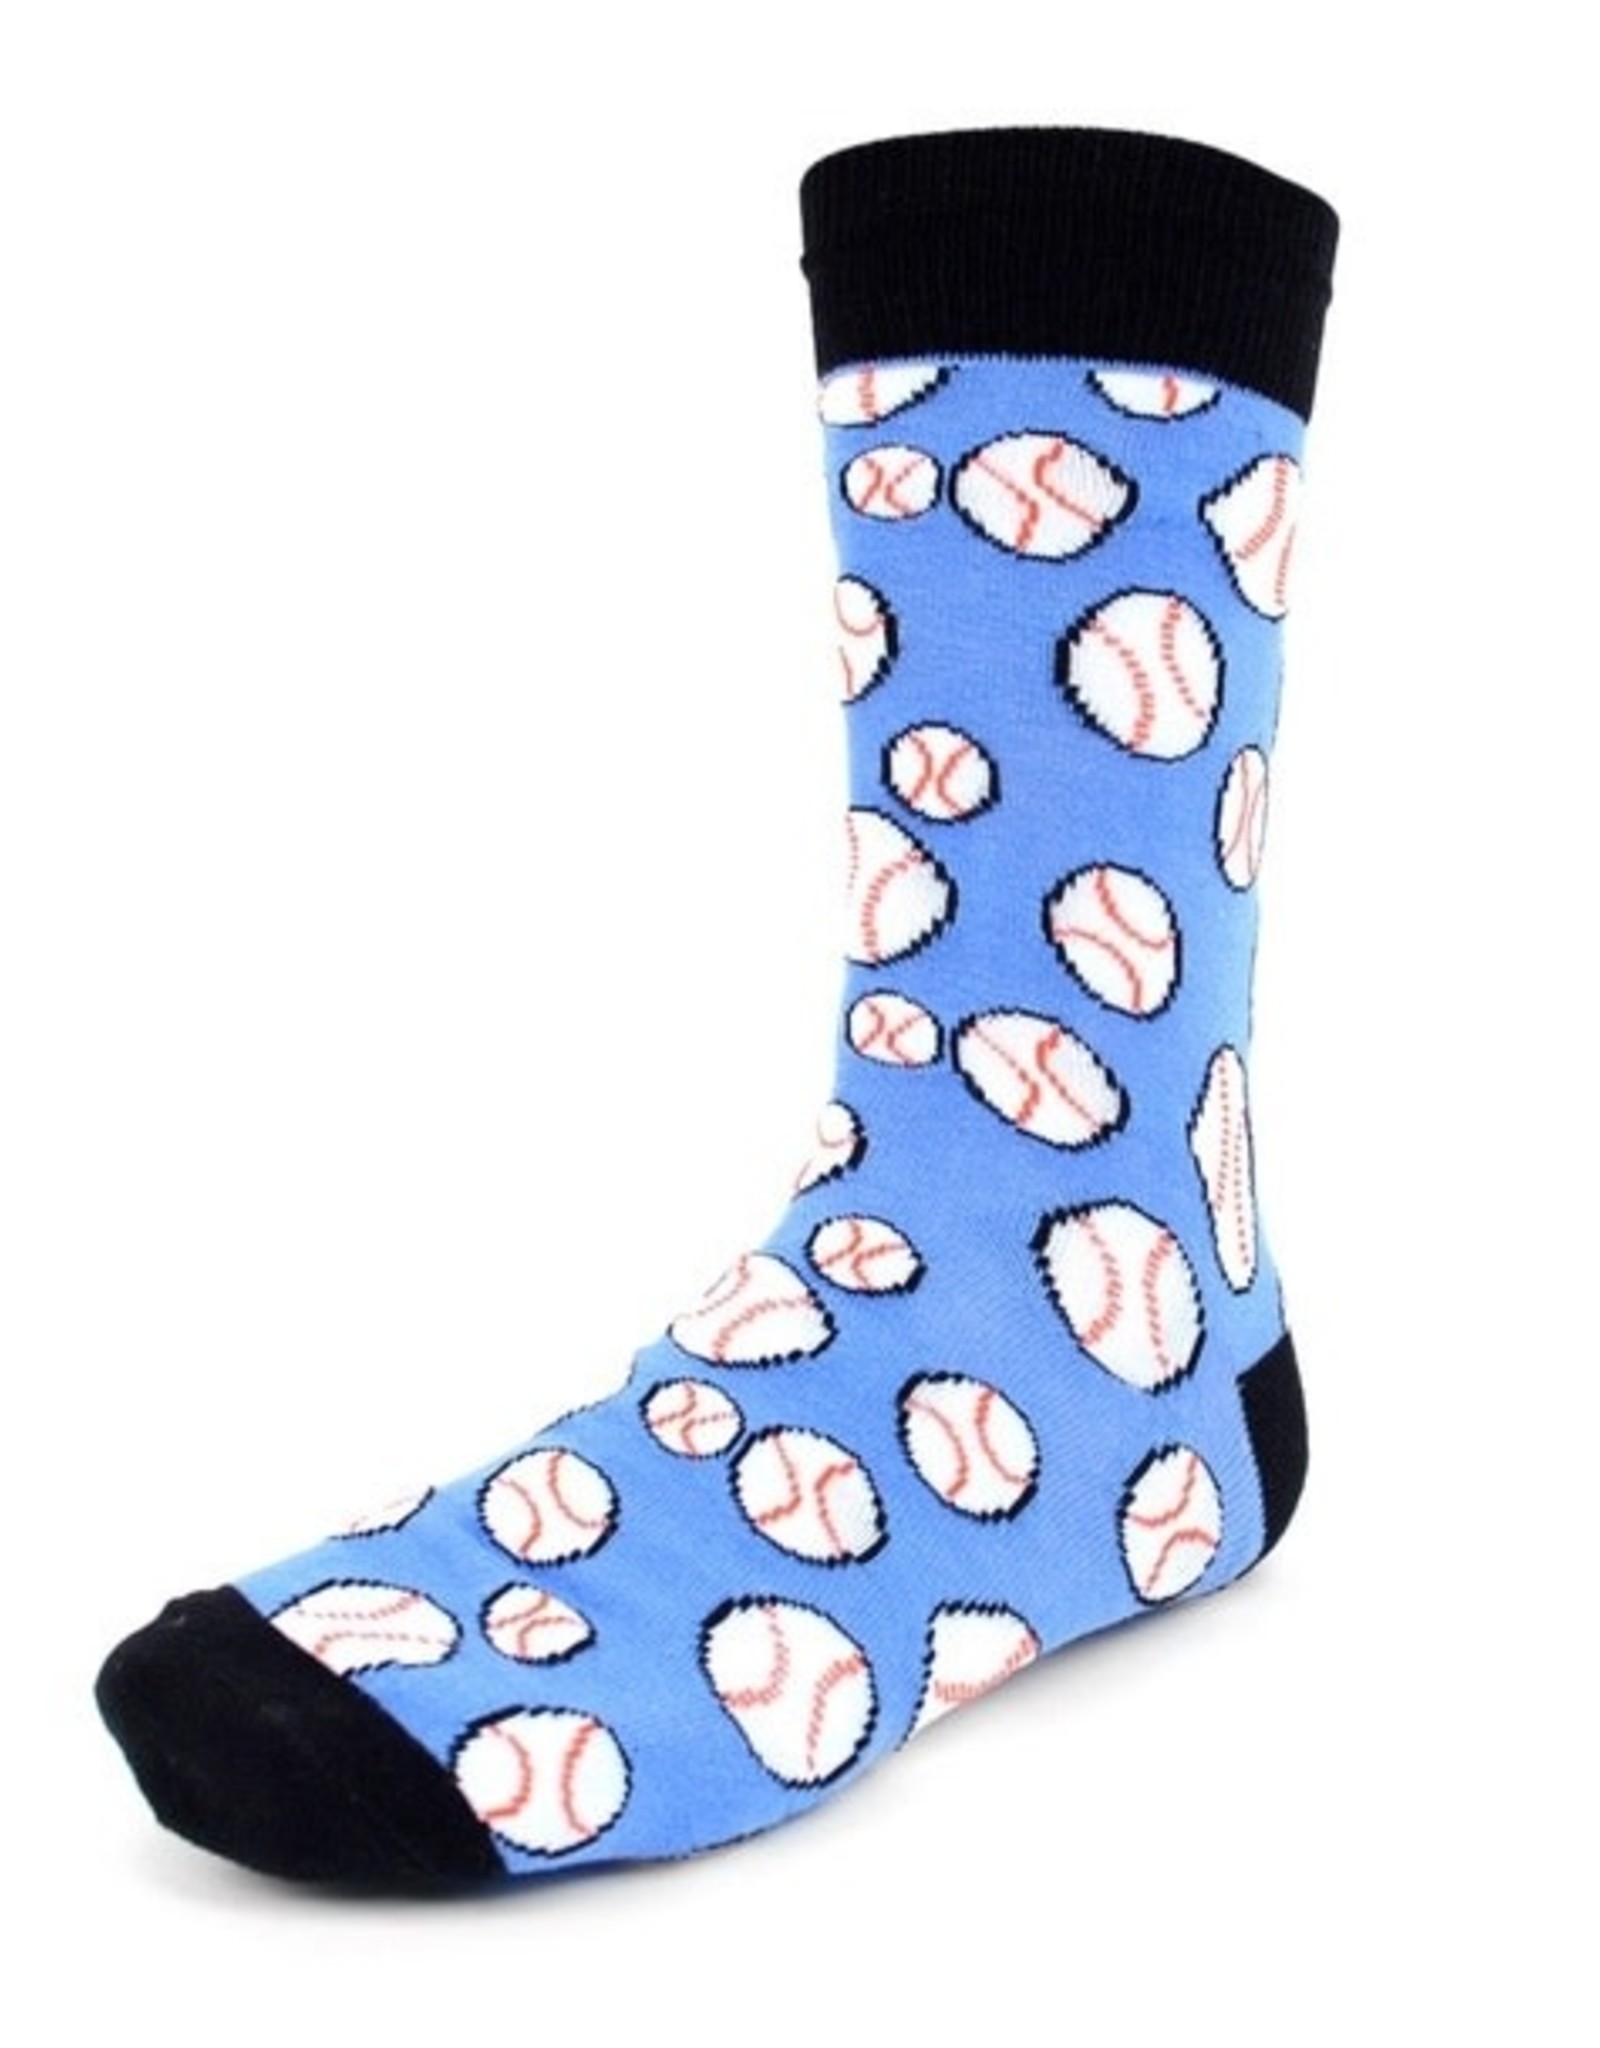 Selini Blue Baseball Socks